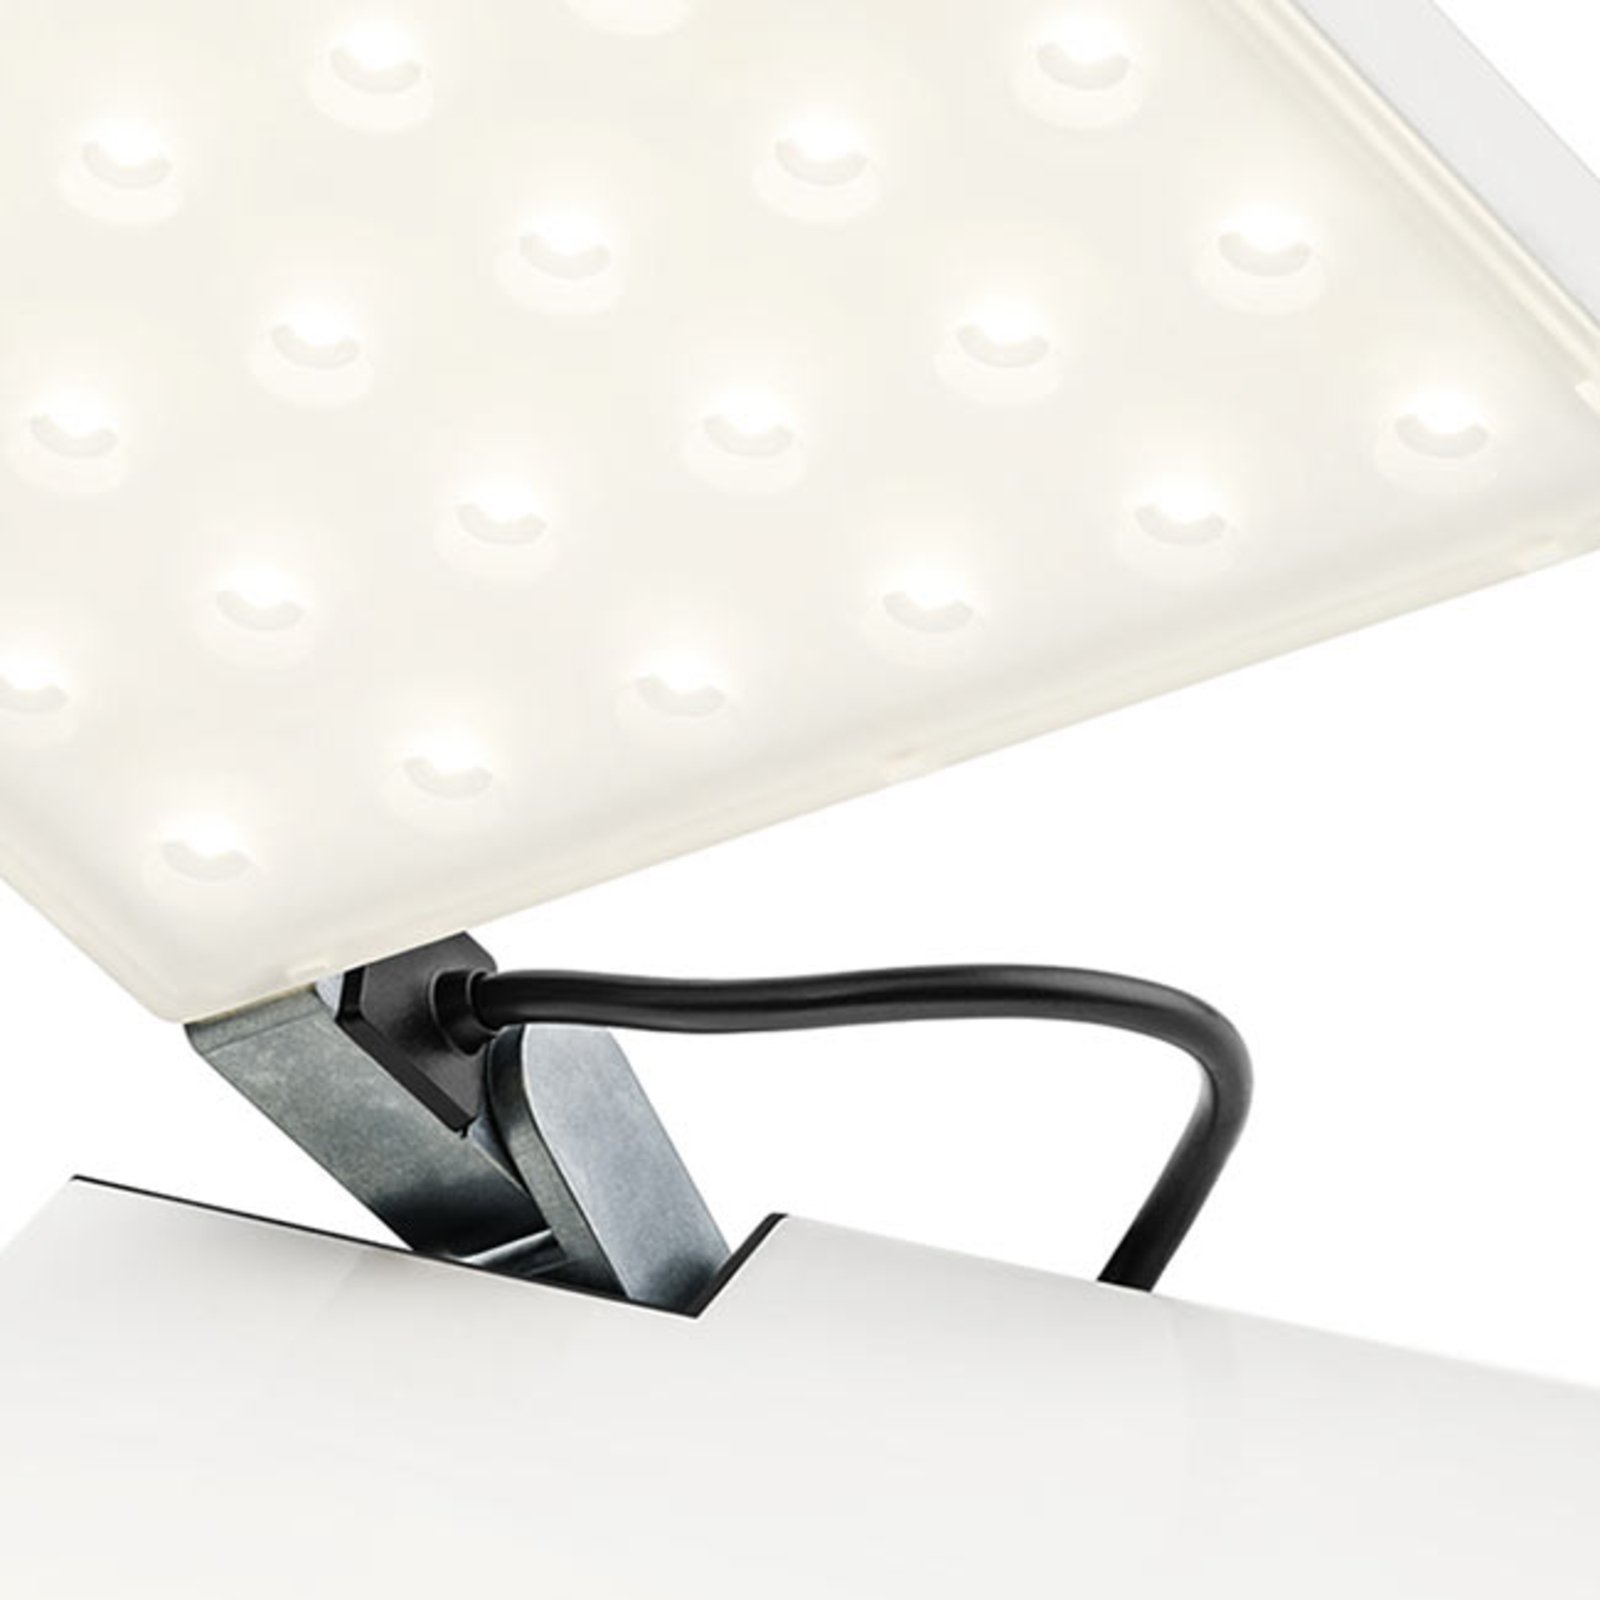 Nimbus Roxxane Fly lampada LED da tavolo, bianco